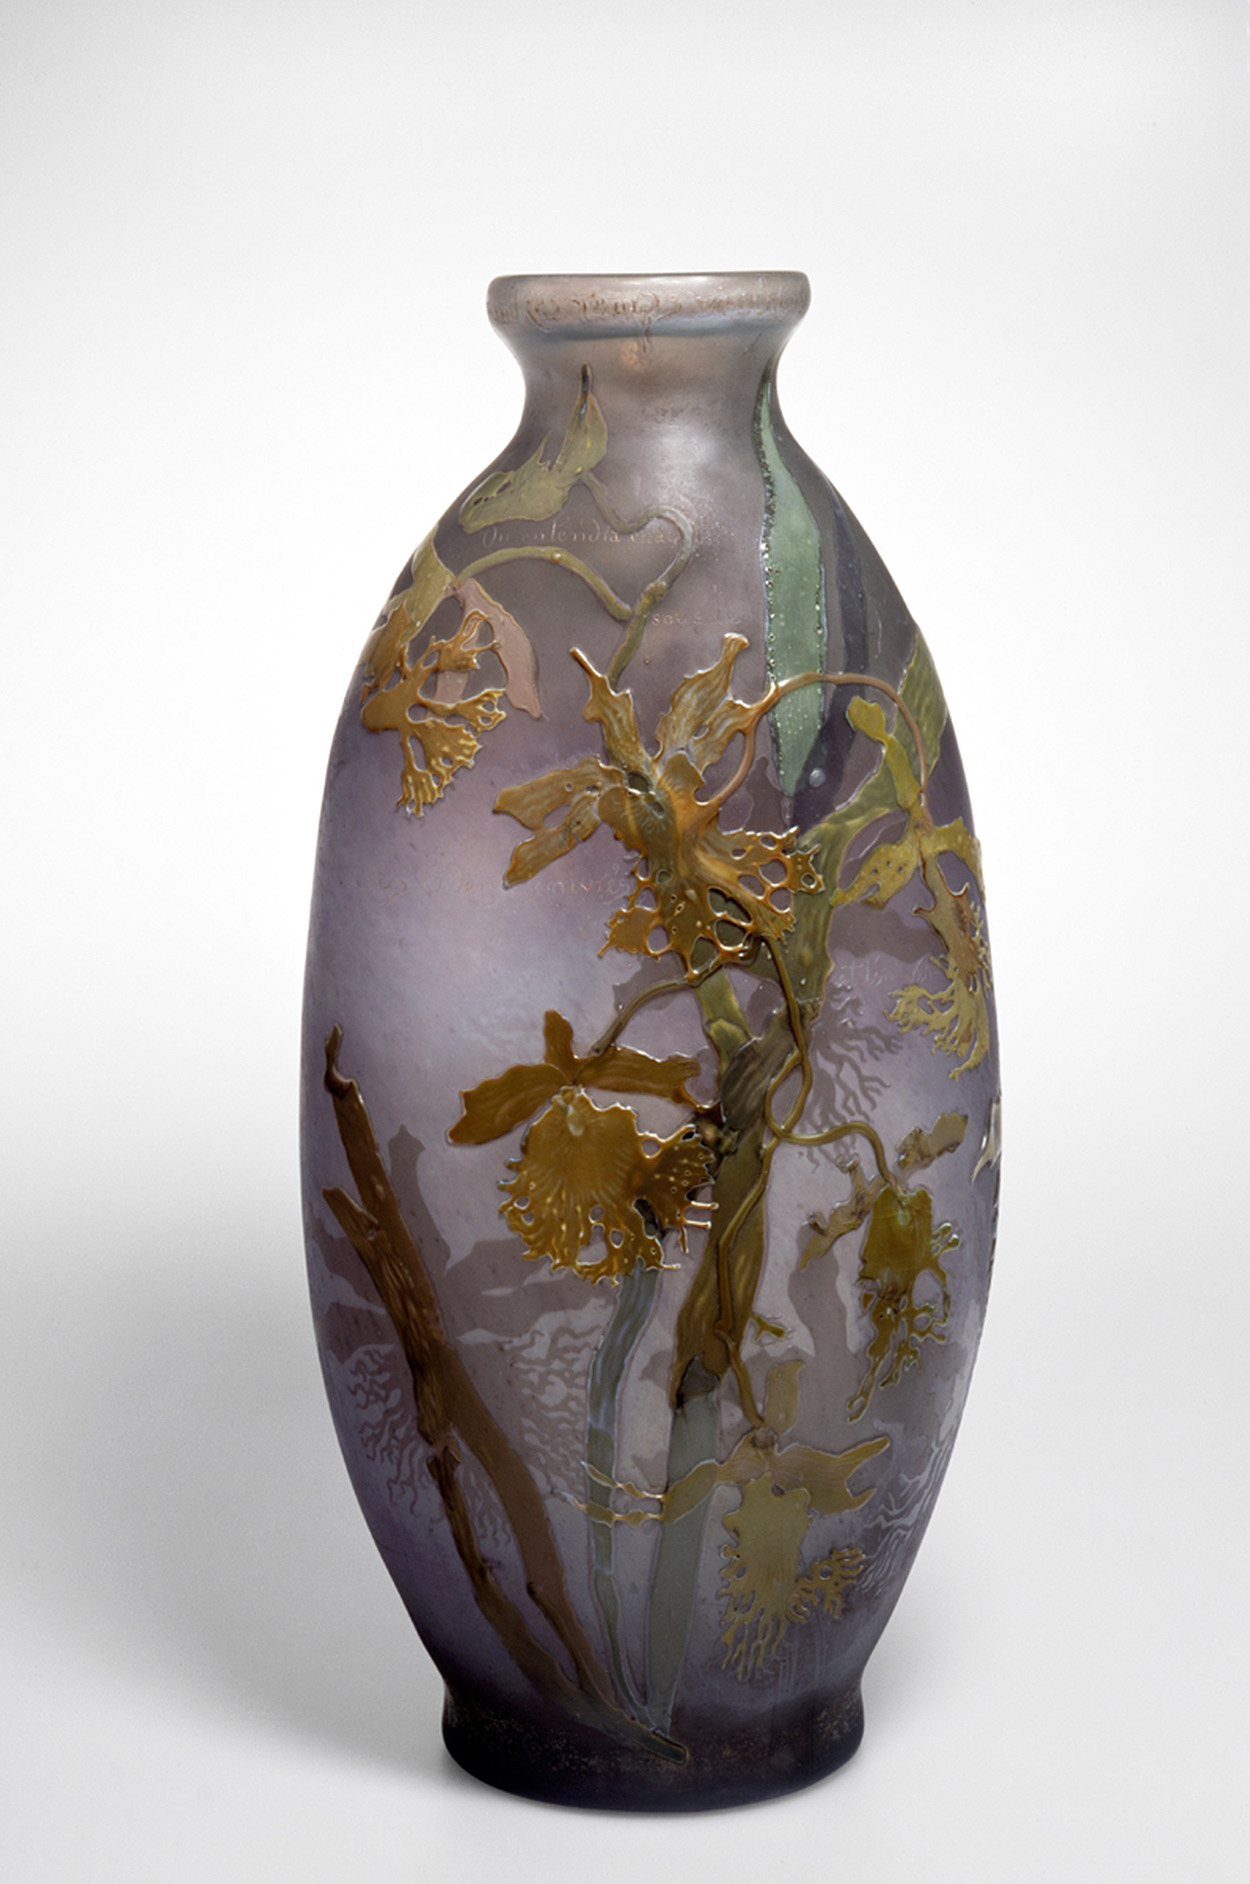 Vase by Emil Gallé - 1899 - 43,00 x 20,50 cm Europeana